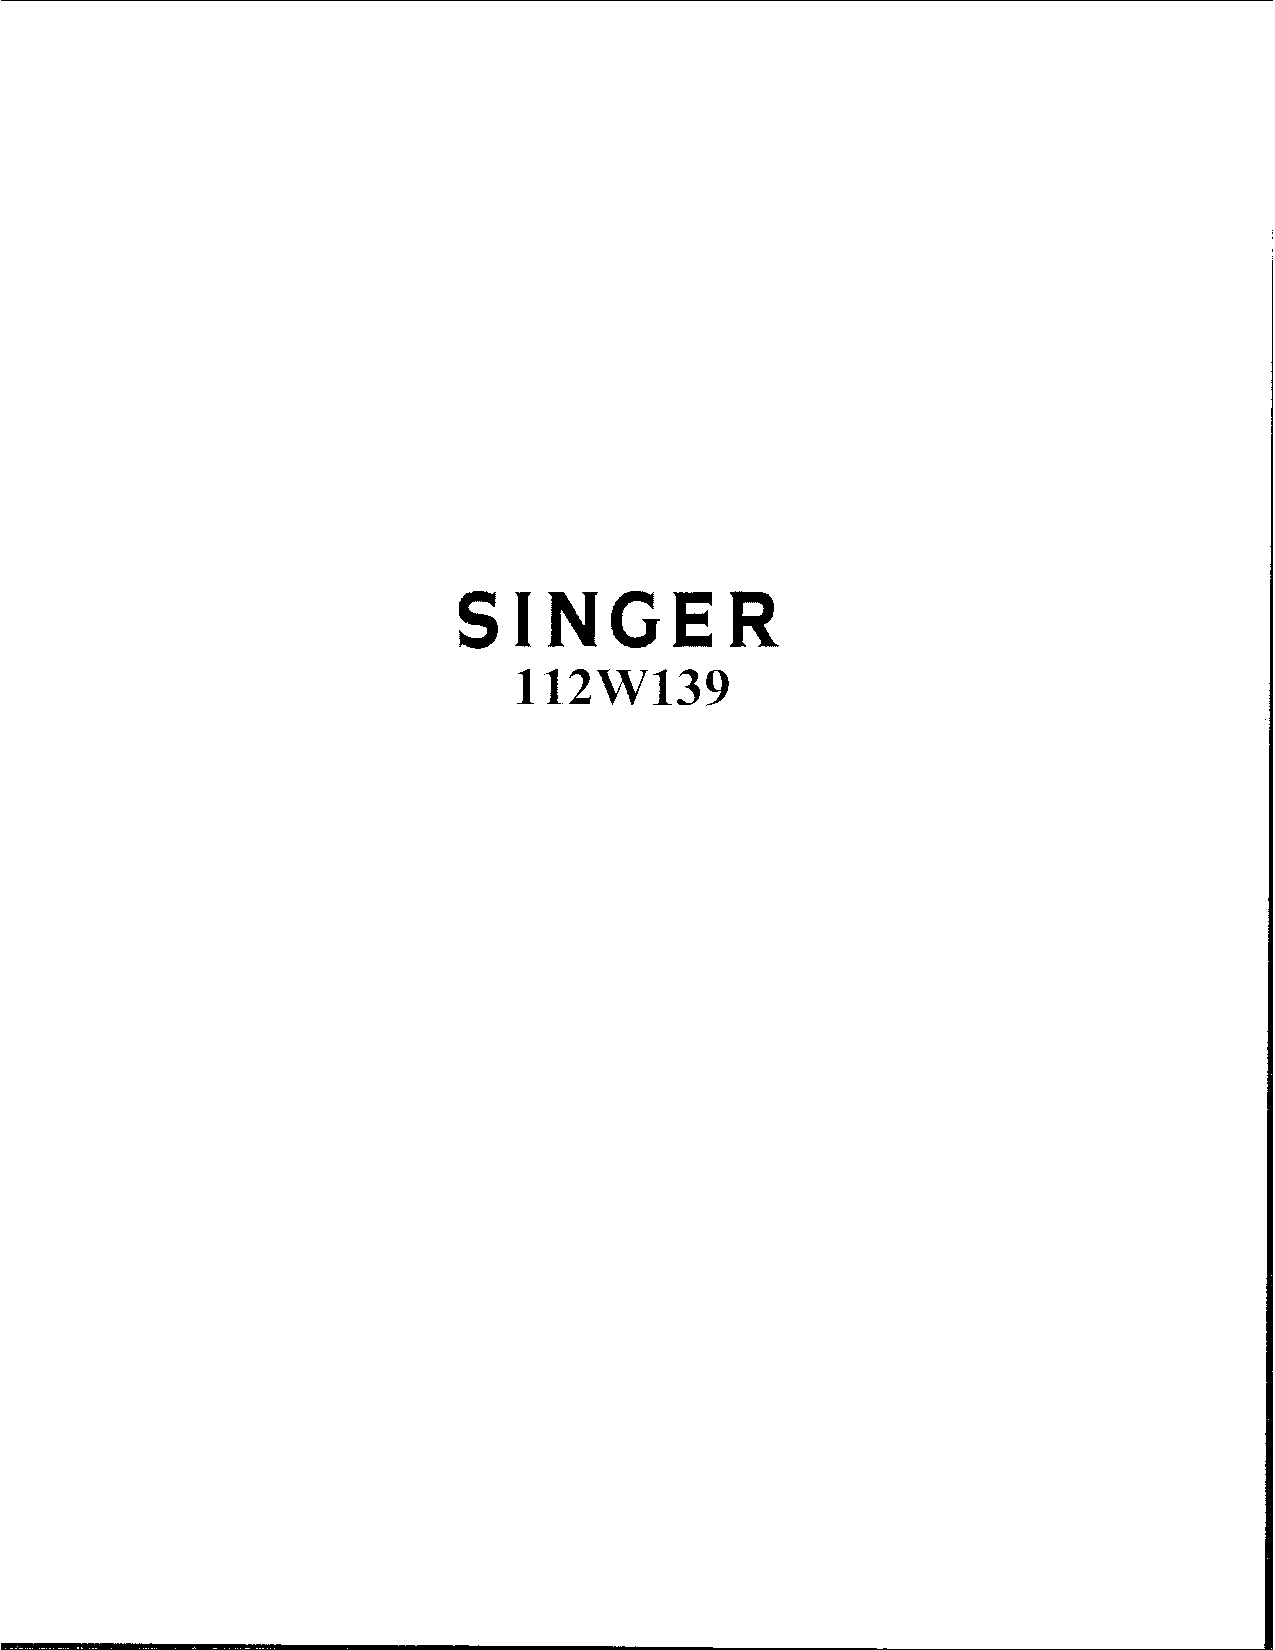 Singer 112W139 User Manual